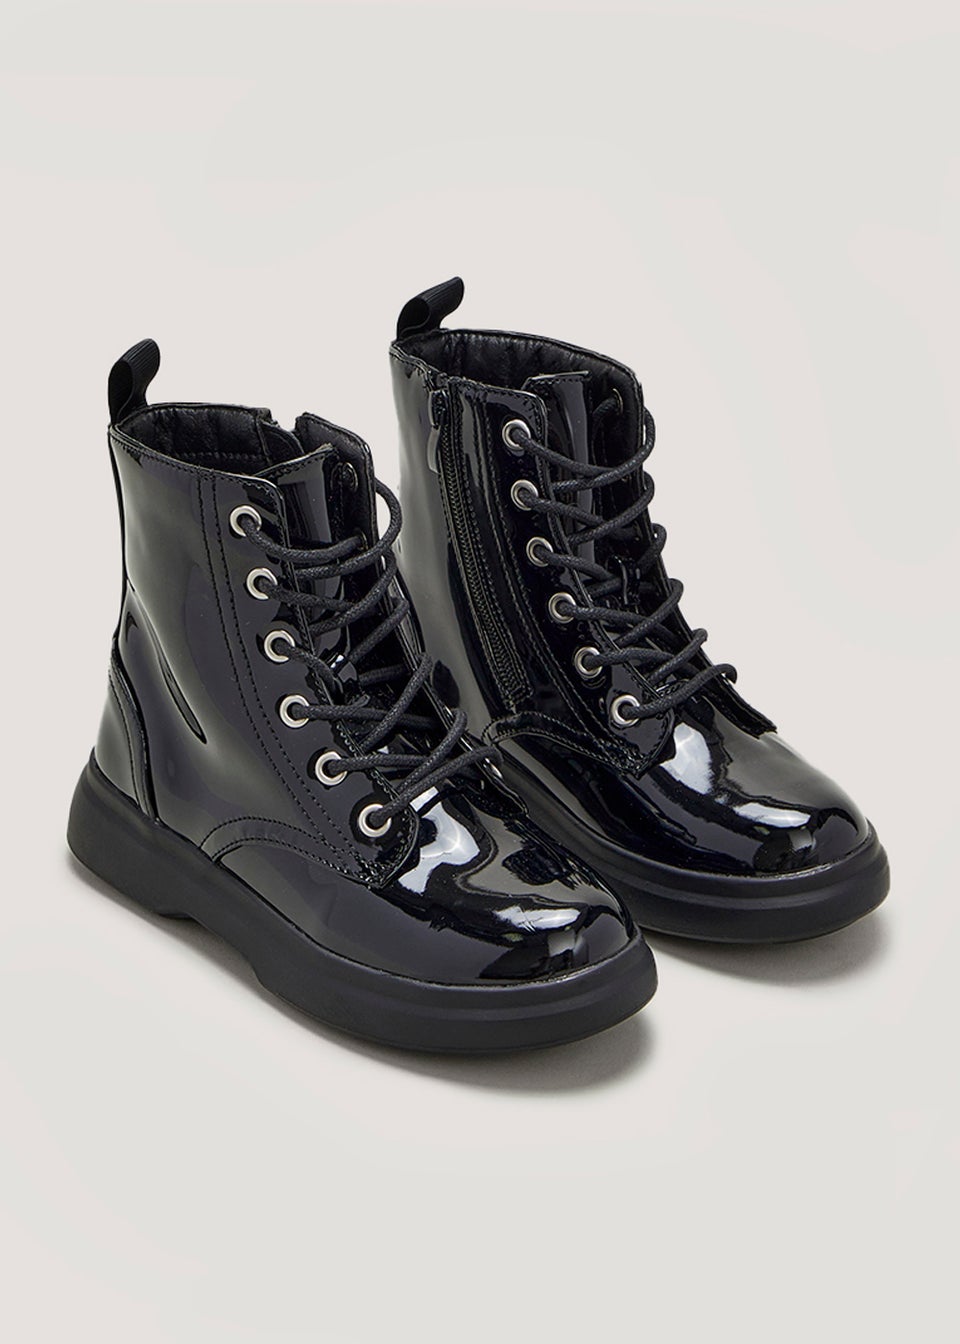 Walkright Lauren Girls Black Patent Ankle Boot-28108 | Shoe Zone